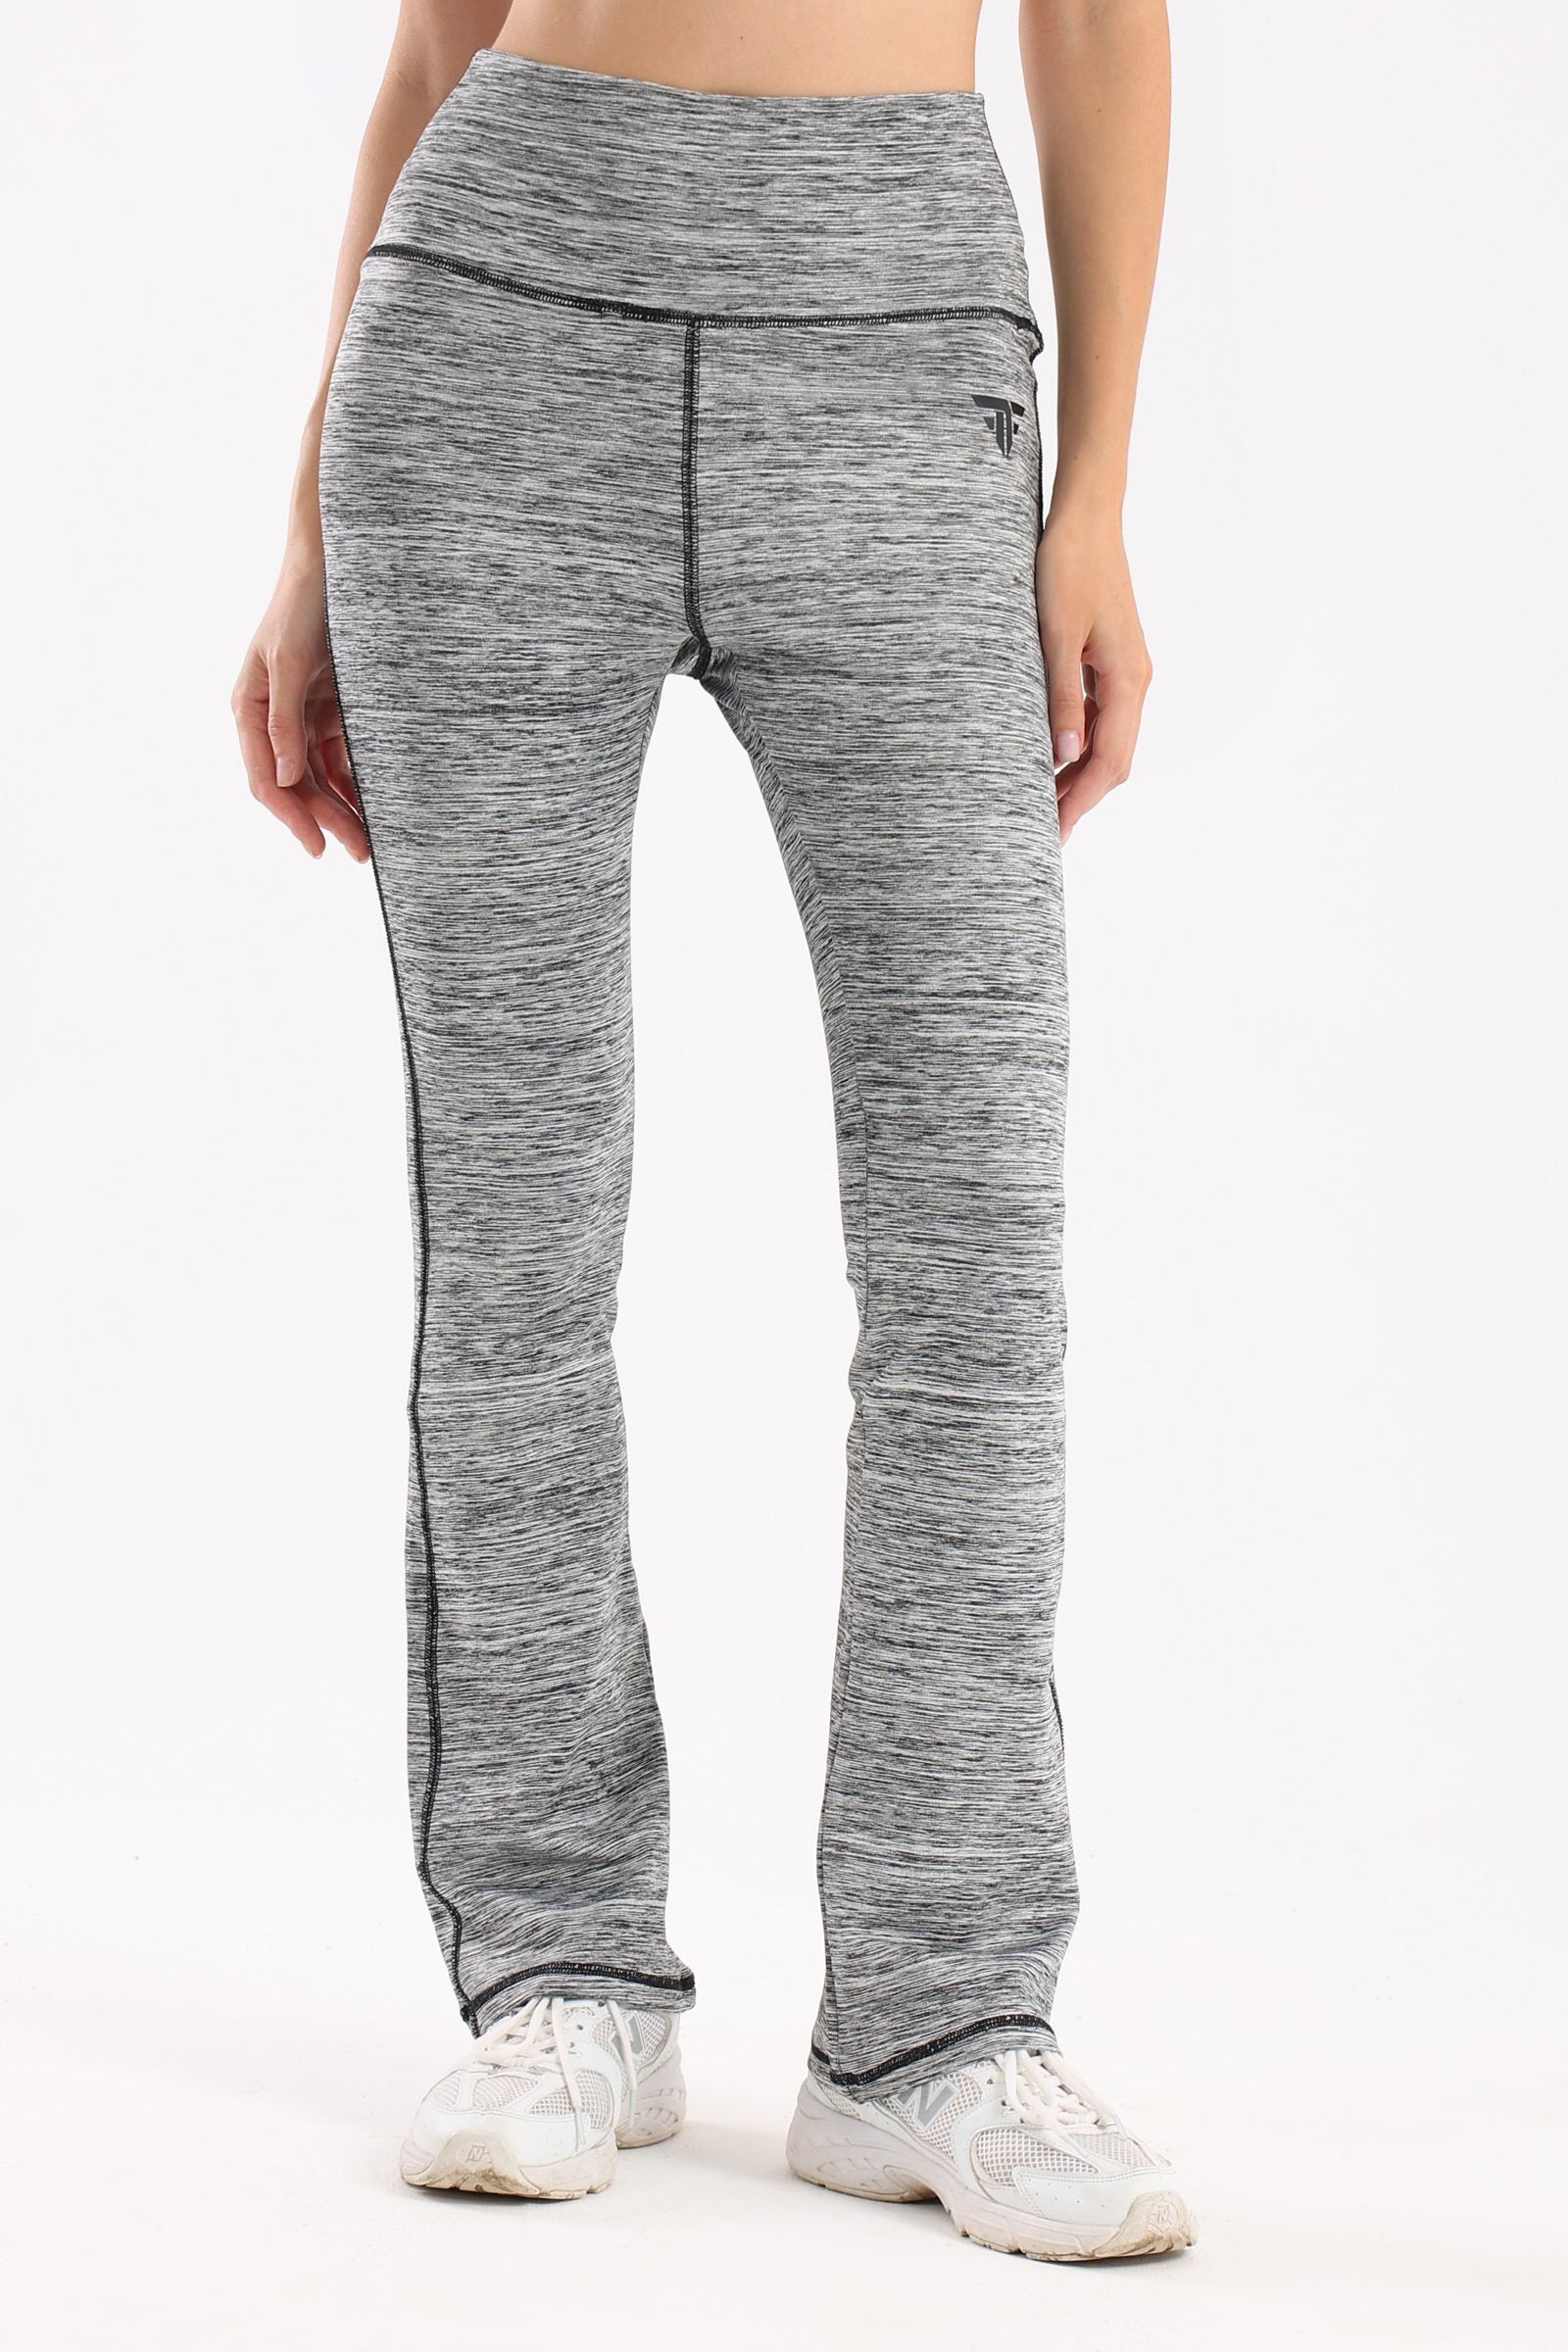 Ash grey heather yoga flare pants